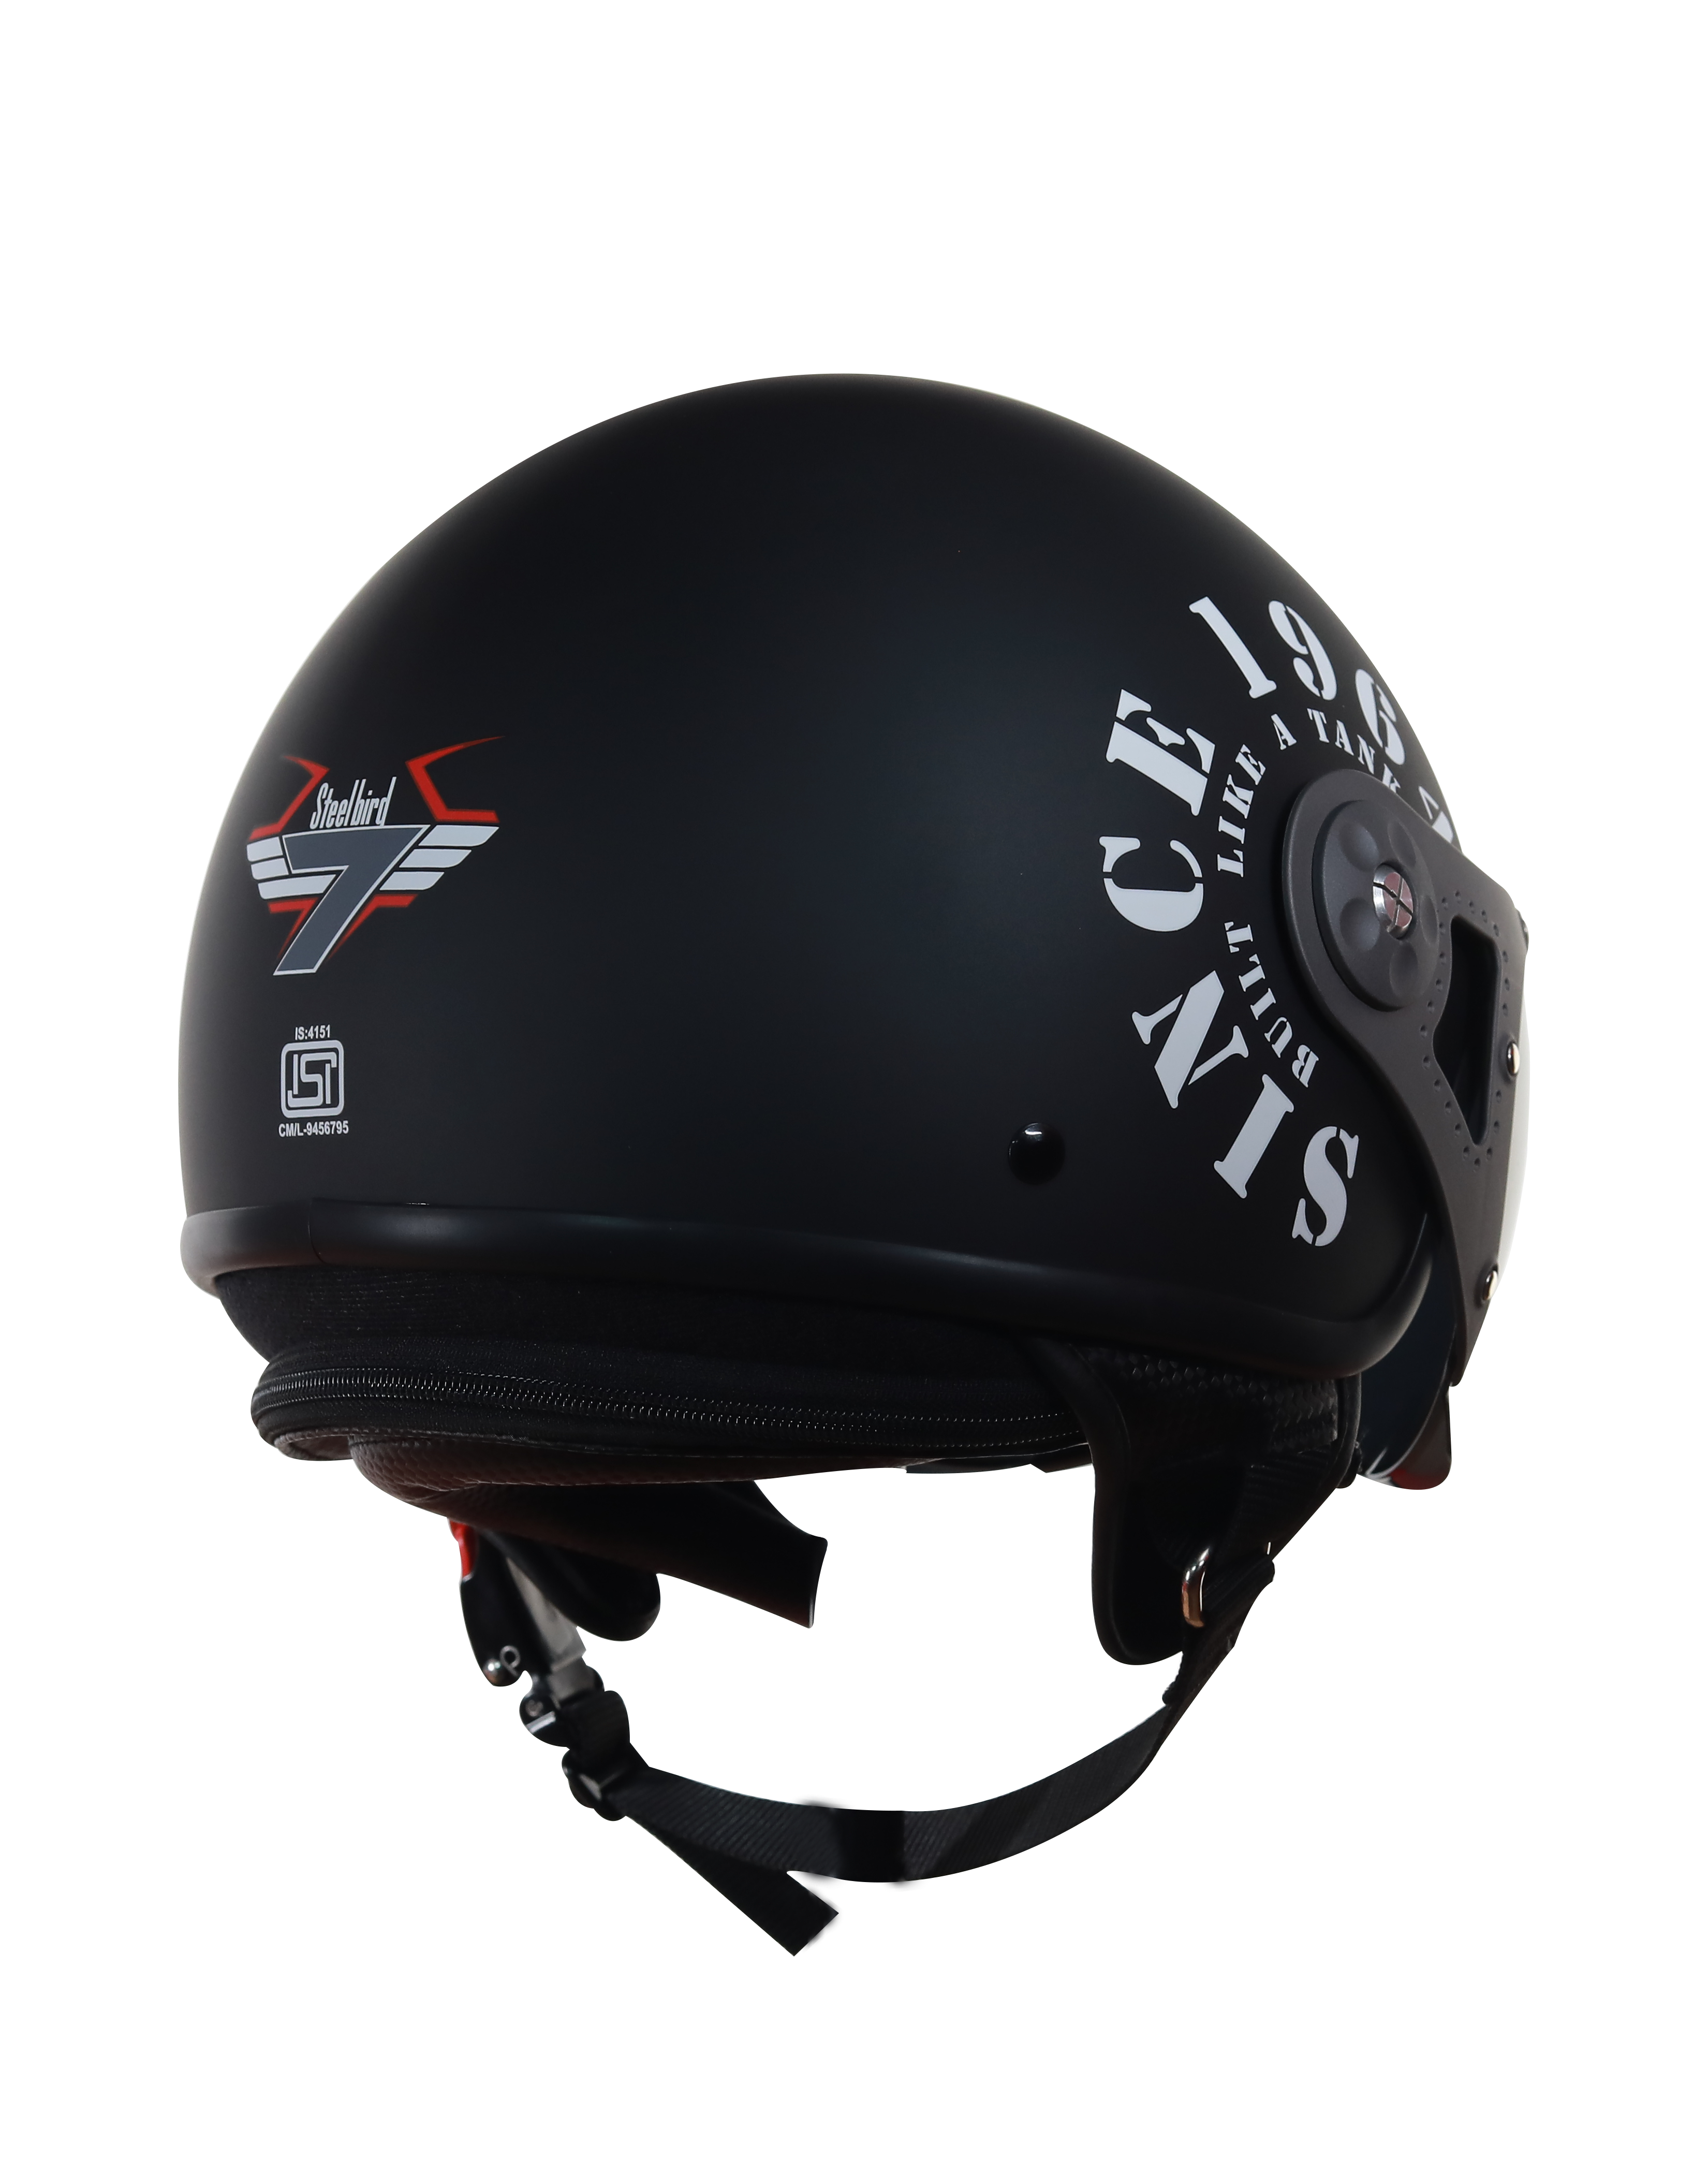 Steelbird SB-27 7Wings Tank Open Face Graphic Helmet (Matt Black Silver With Smoke Visor)